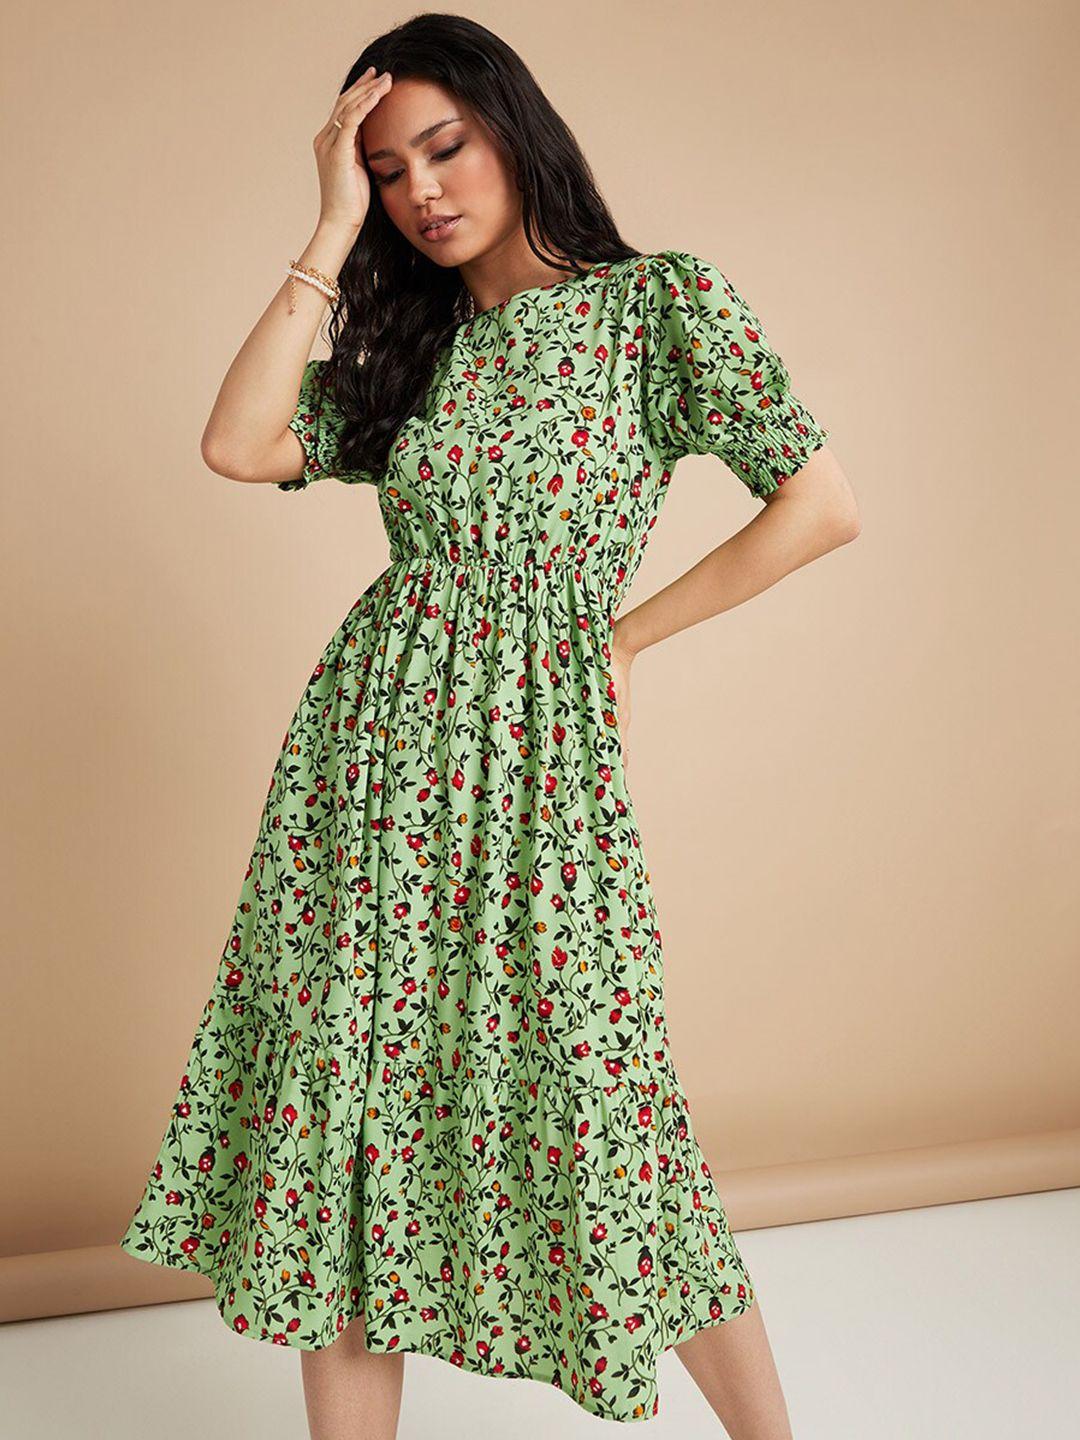 styli green floral a-line dress